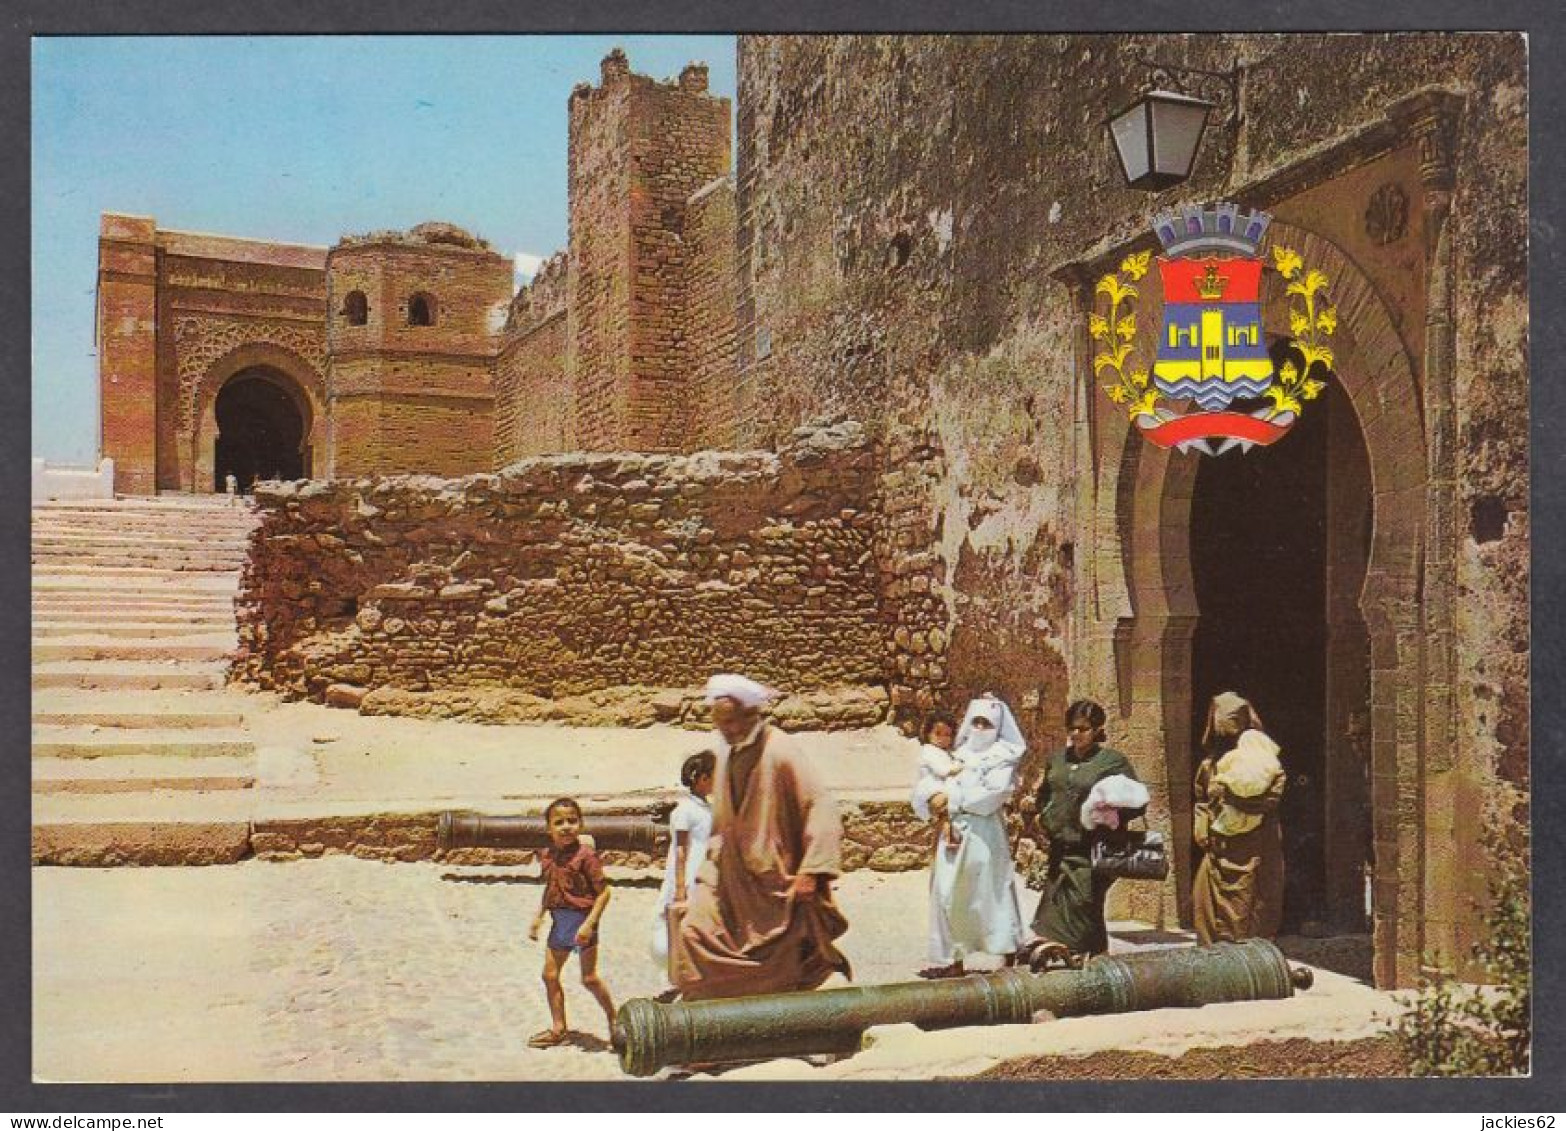 127459/ RABAT, Kasbah Des Oudayas - Rabat